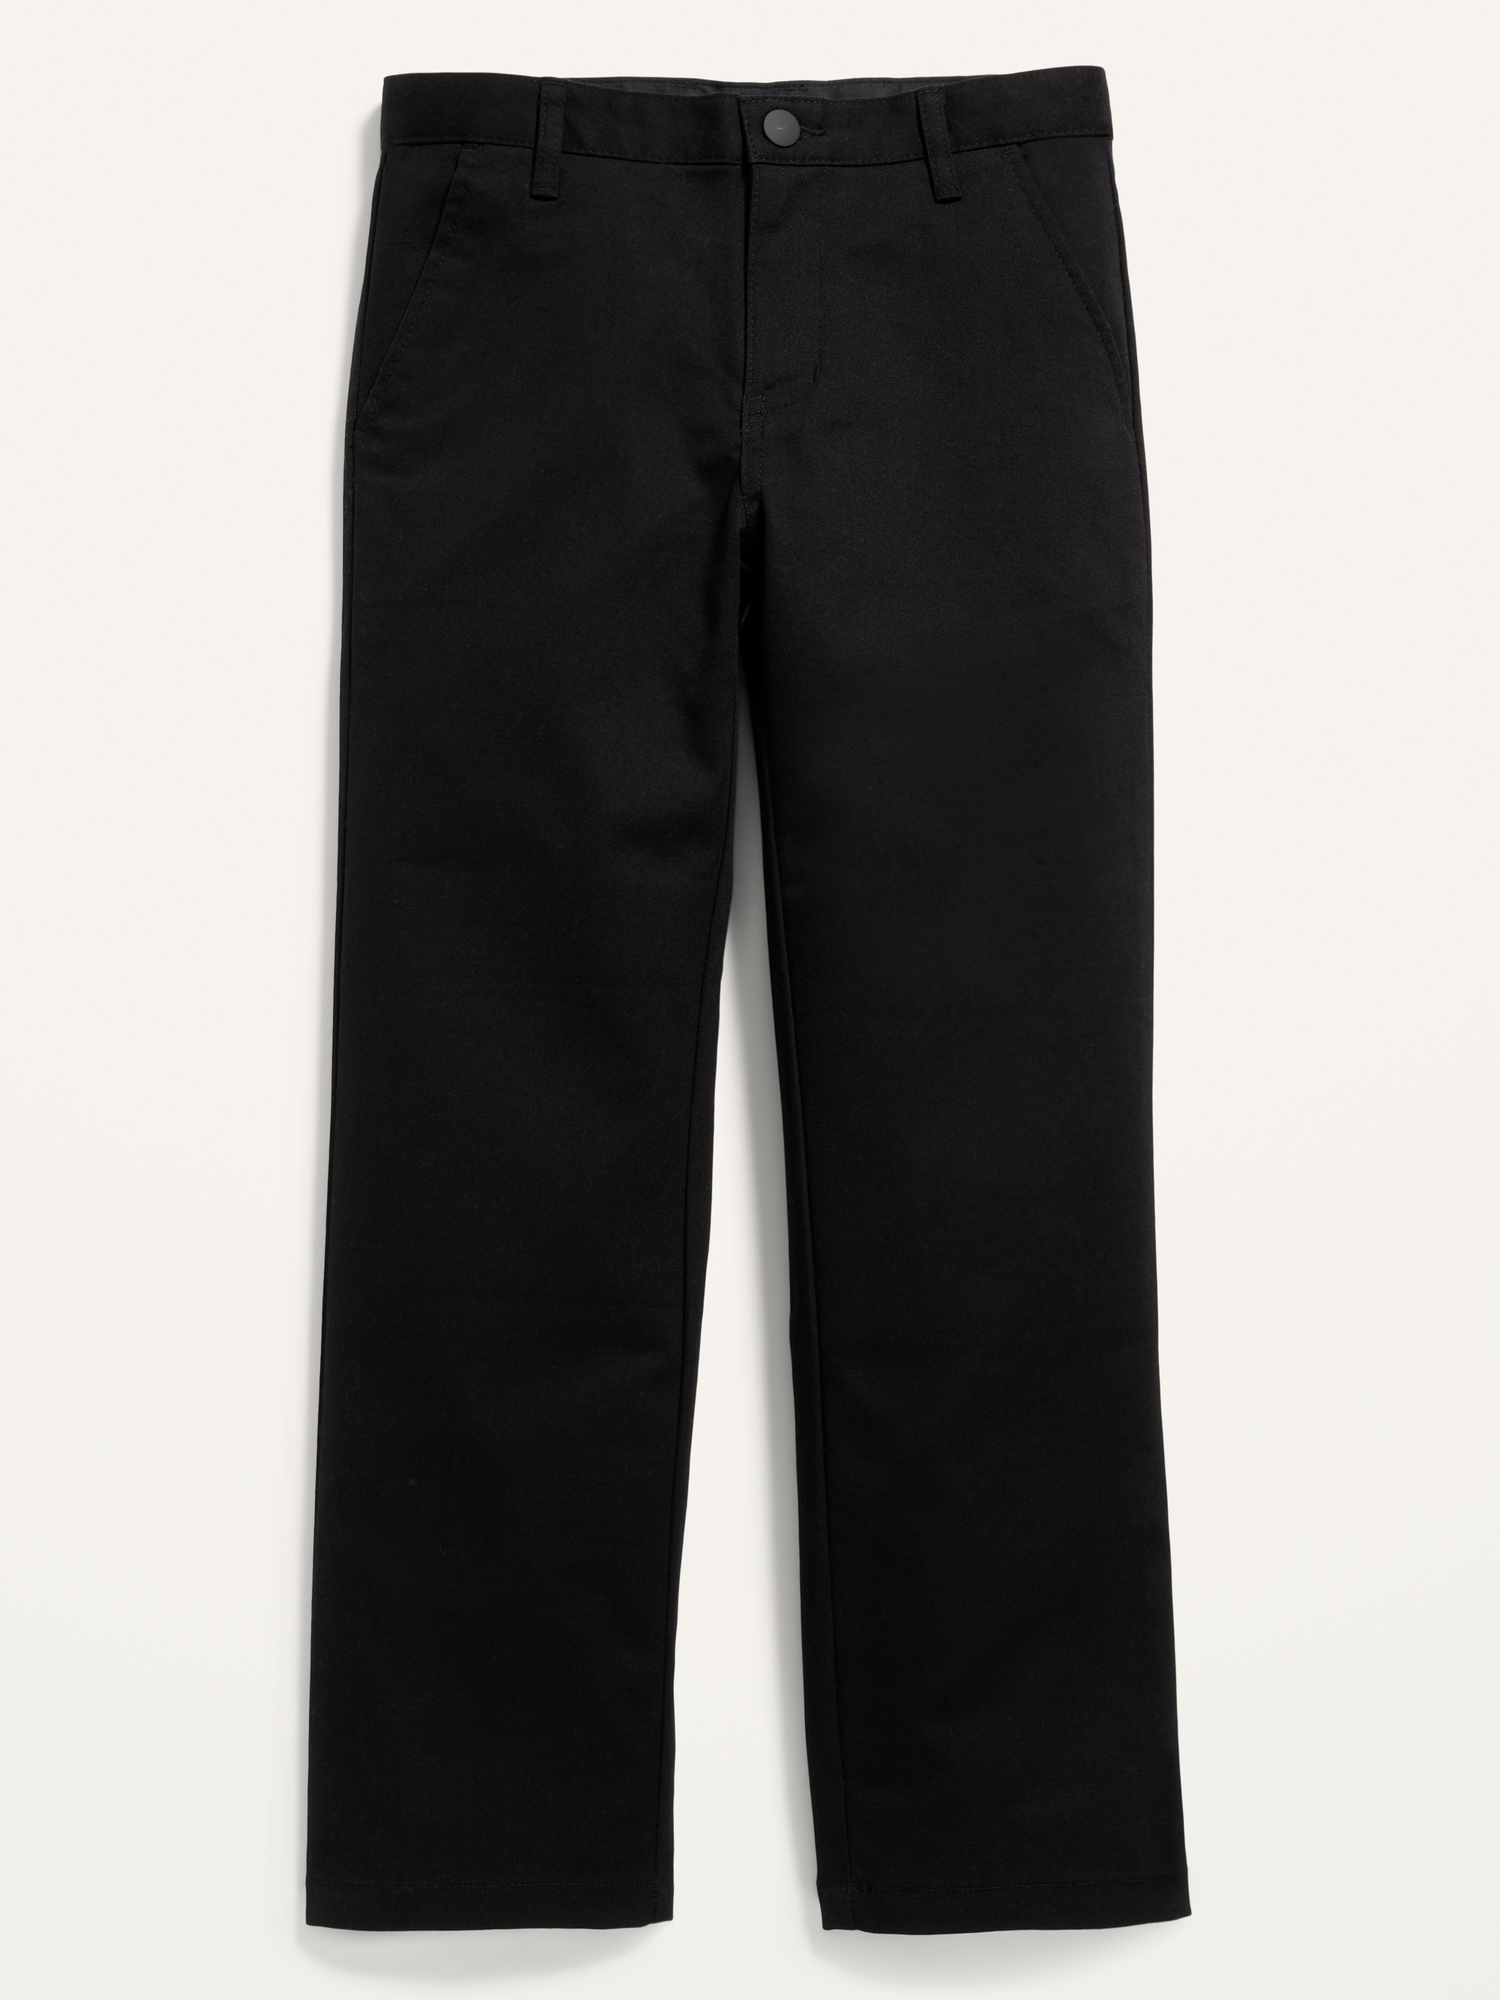 Boys School Uniform Pull Up Trousers Elasticated Waist BLACK/GREY/NAVY  1-13YRS | eBay